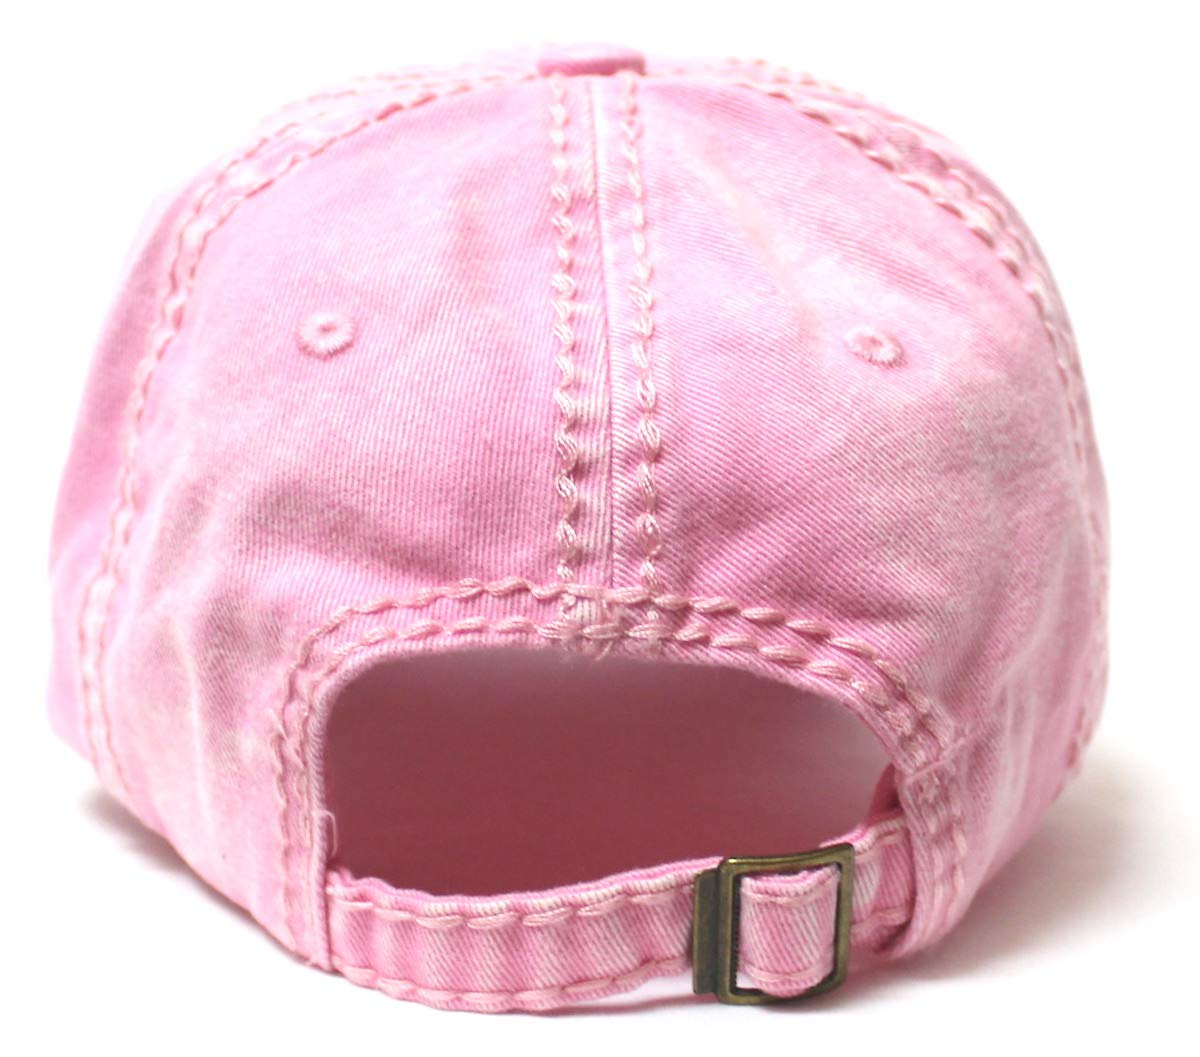 CAPS 'N VINTAGE Distressed Adjustable Ballcap California Bear Monogram Embroidery Hat, Washed Princess Pink - Caps 'N Vintage 